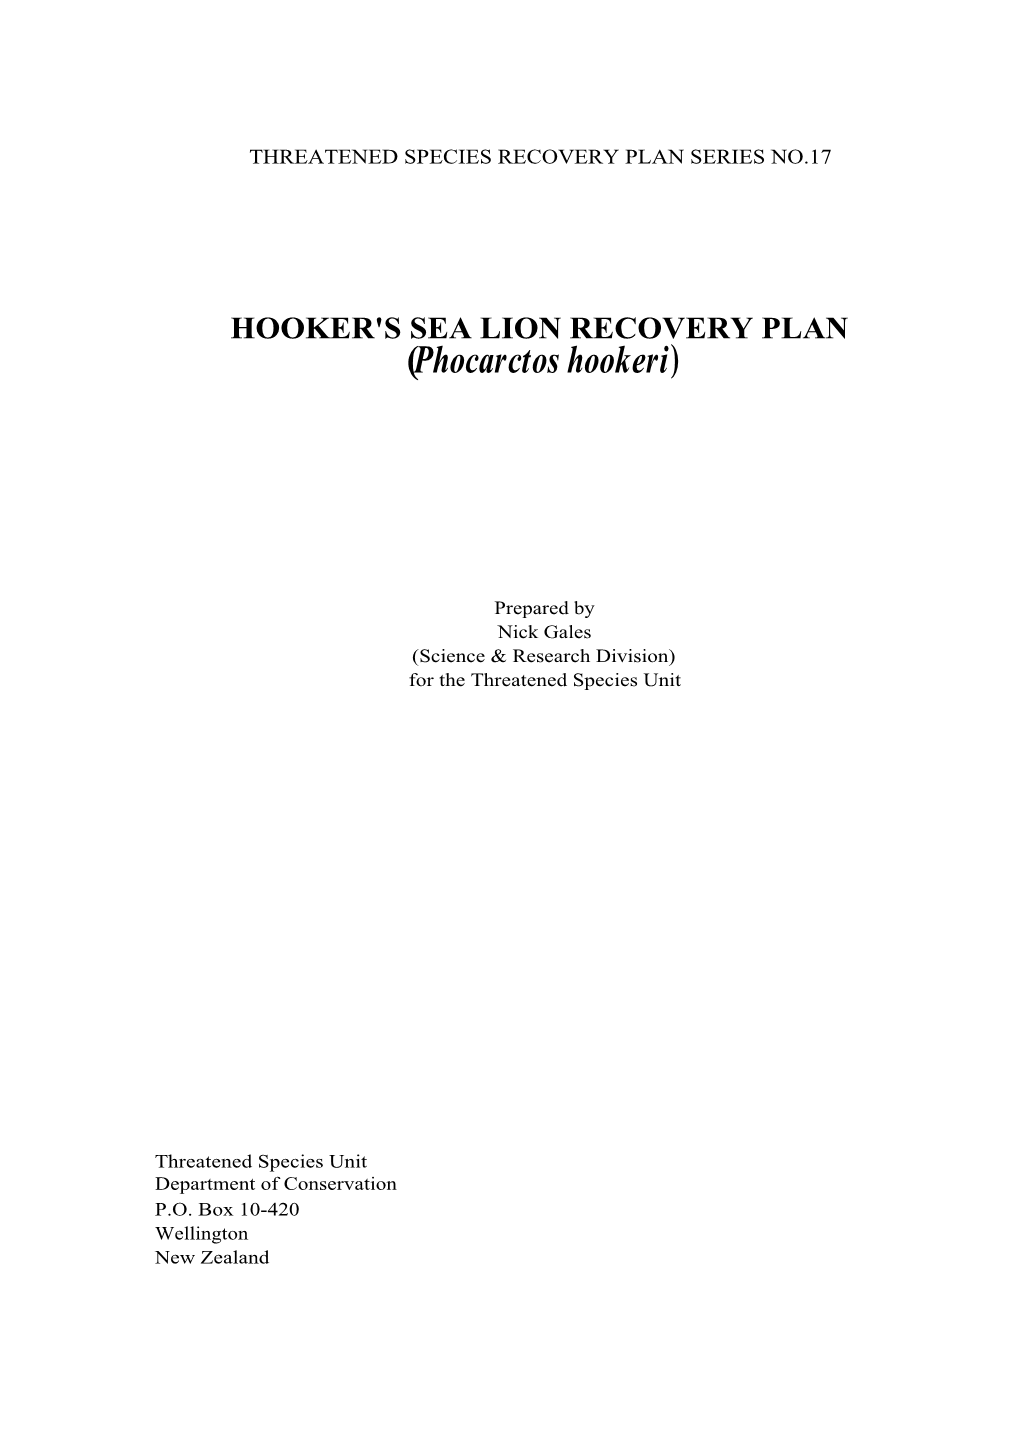 HOOKER's SEA LION RECOVERY PLAN (Phocarctos Hookeri)